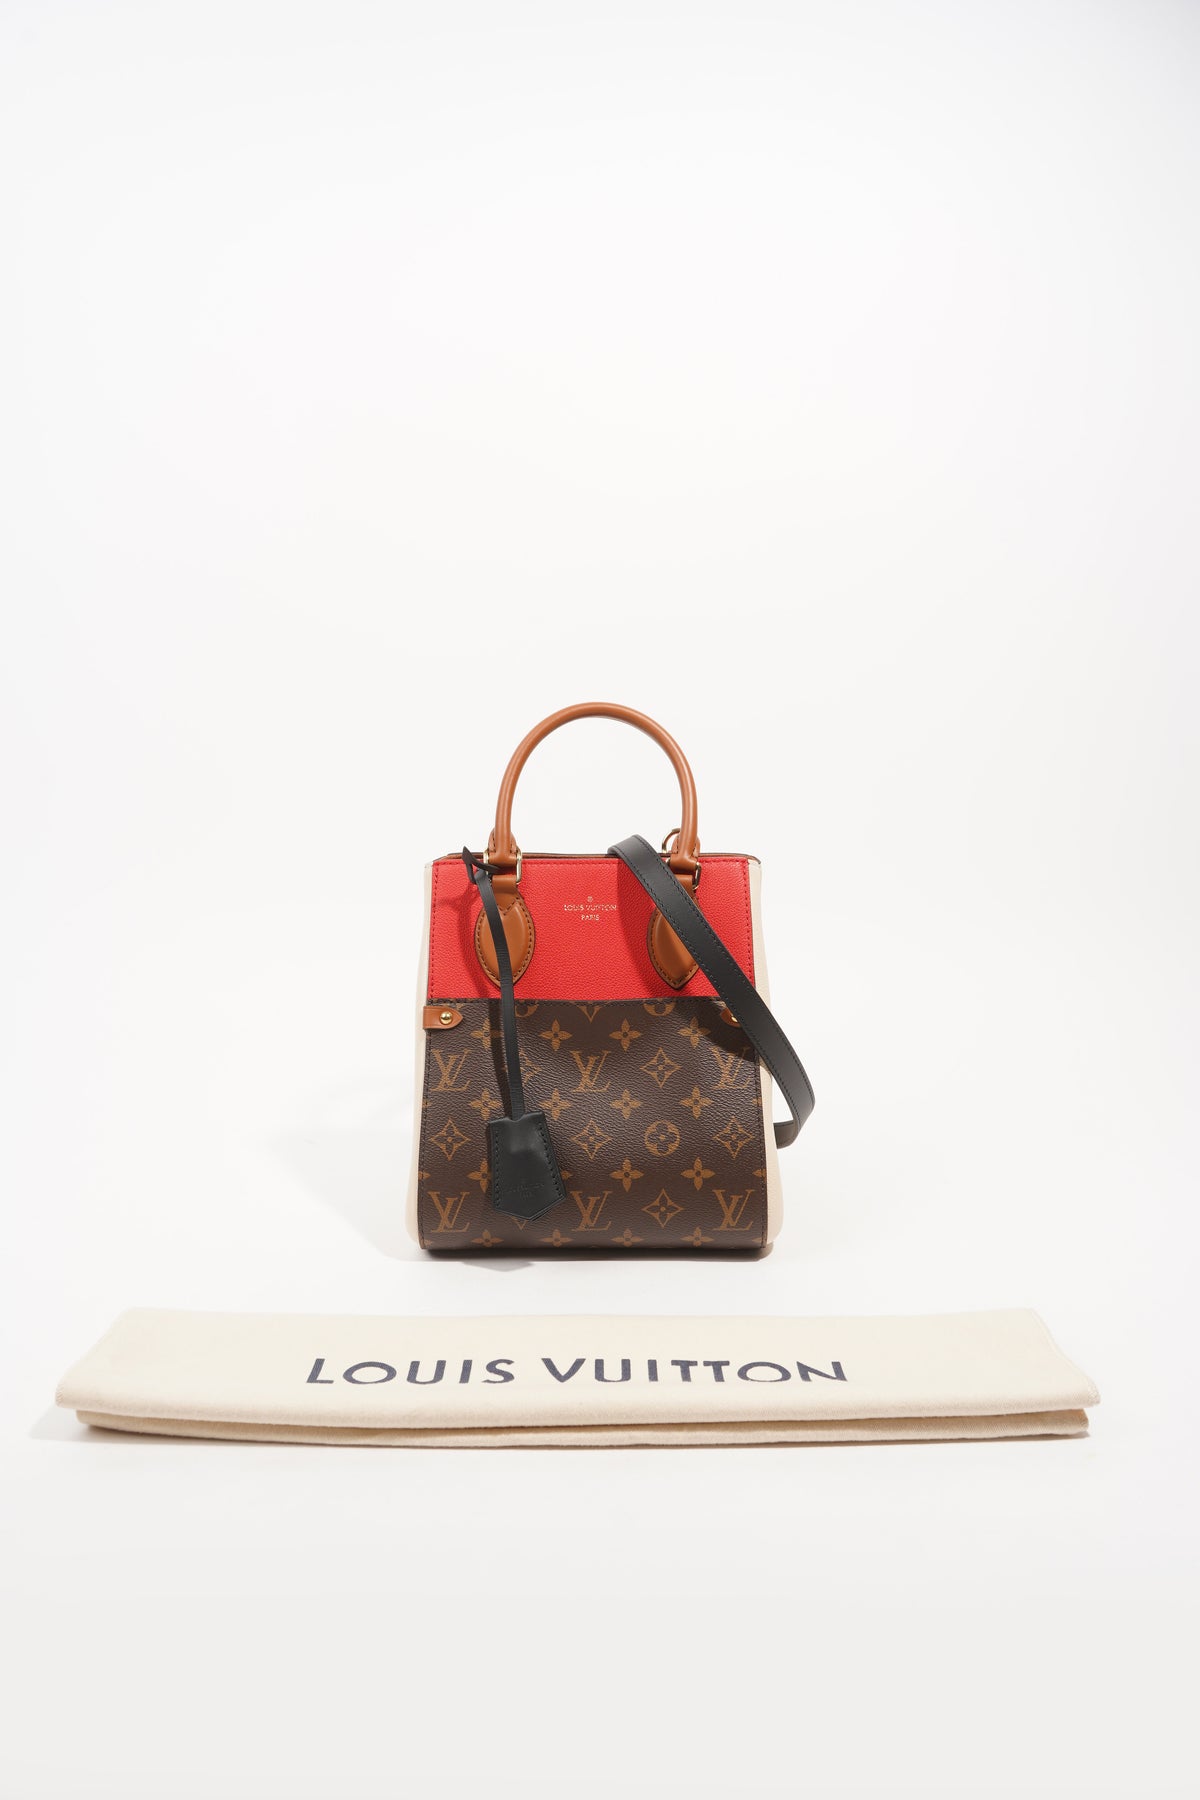 Louis Vuitton 2020 Monogram Fold Tote